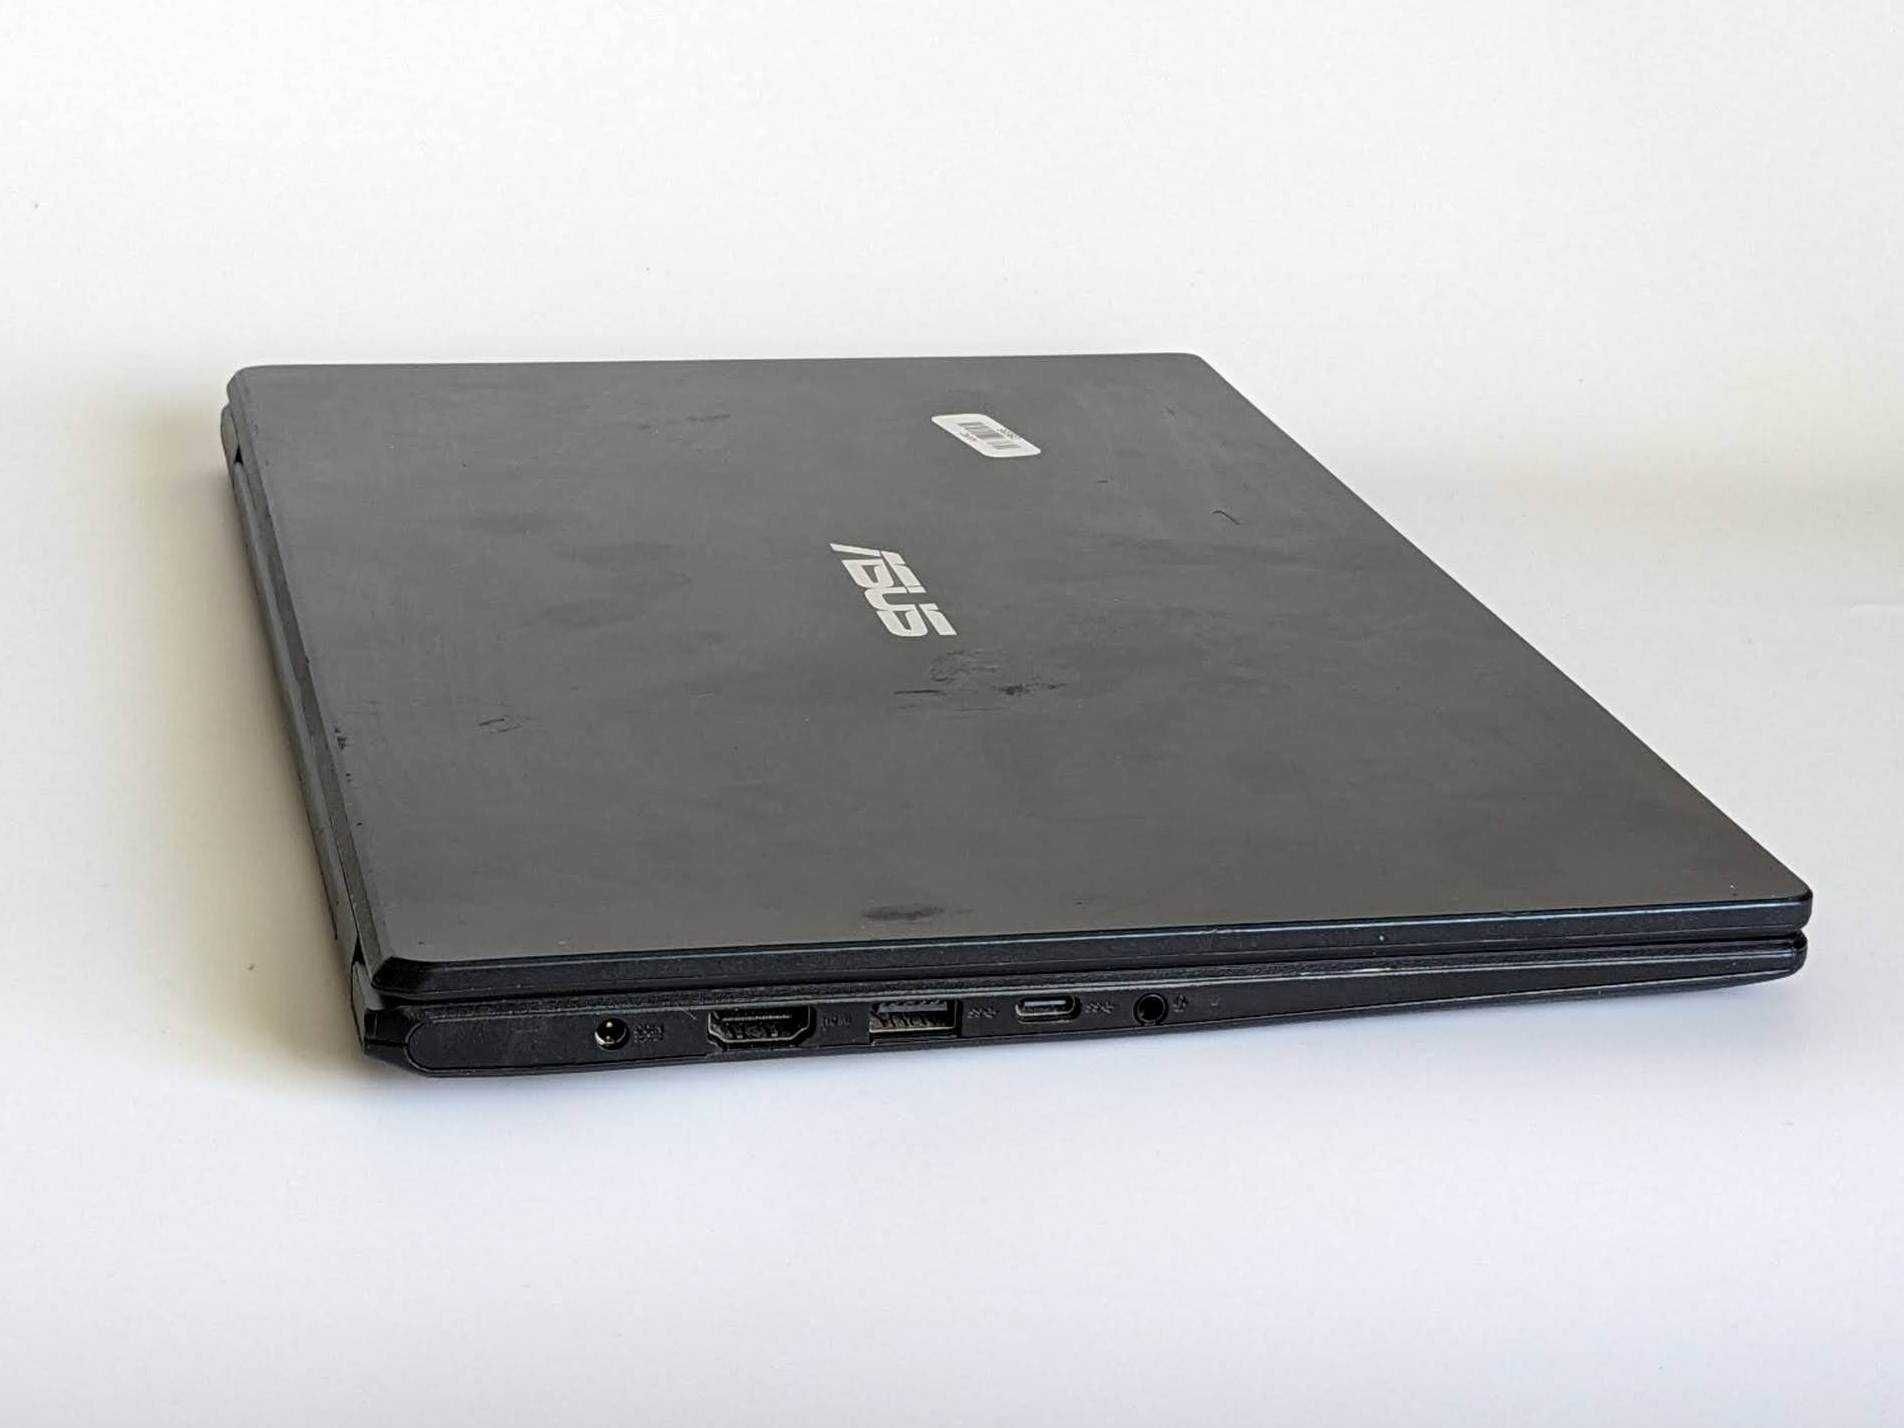 Asus L410ma Ultrabook (Full HD, IPS)